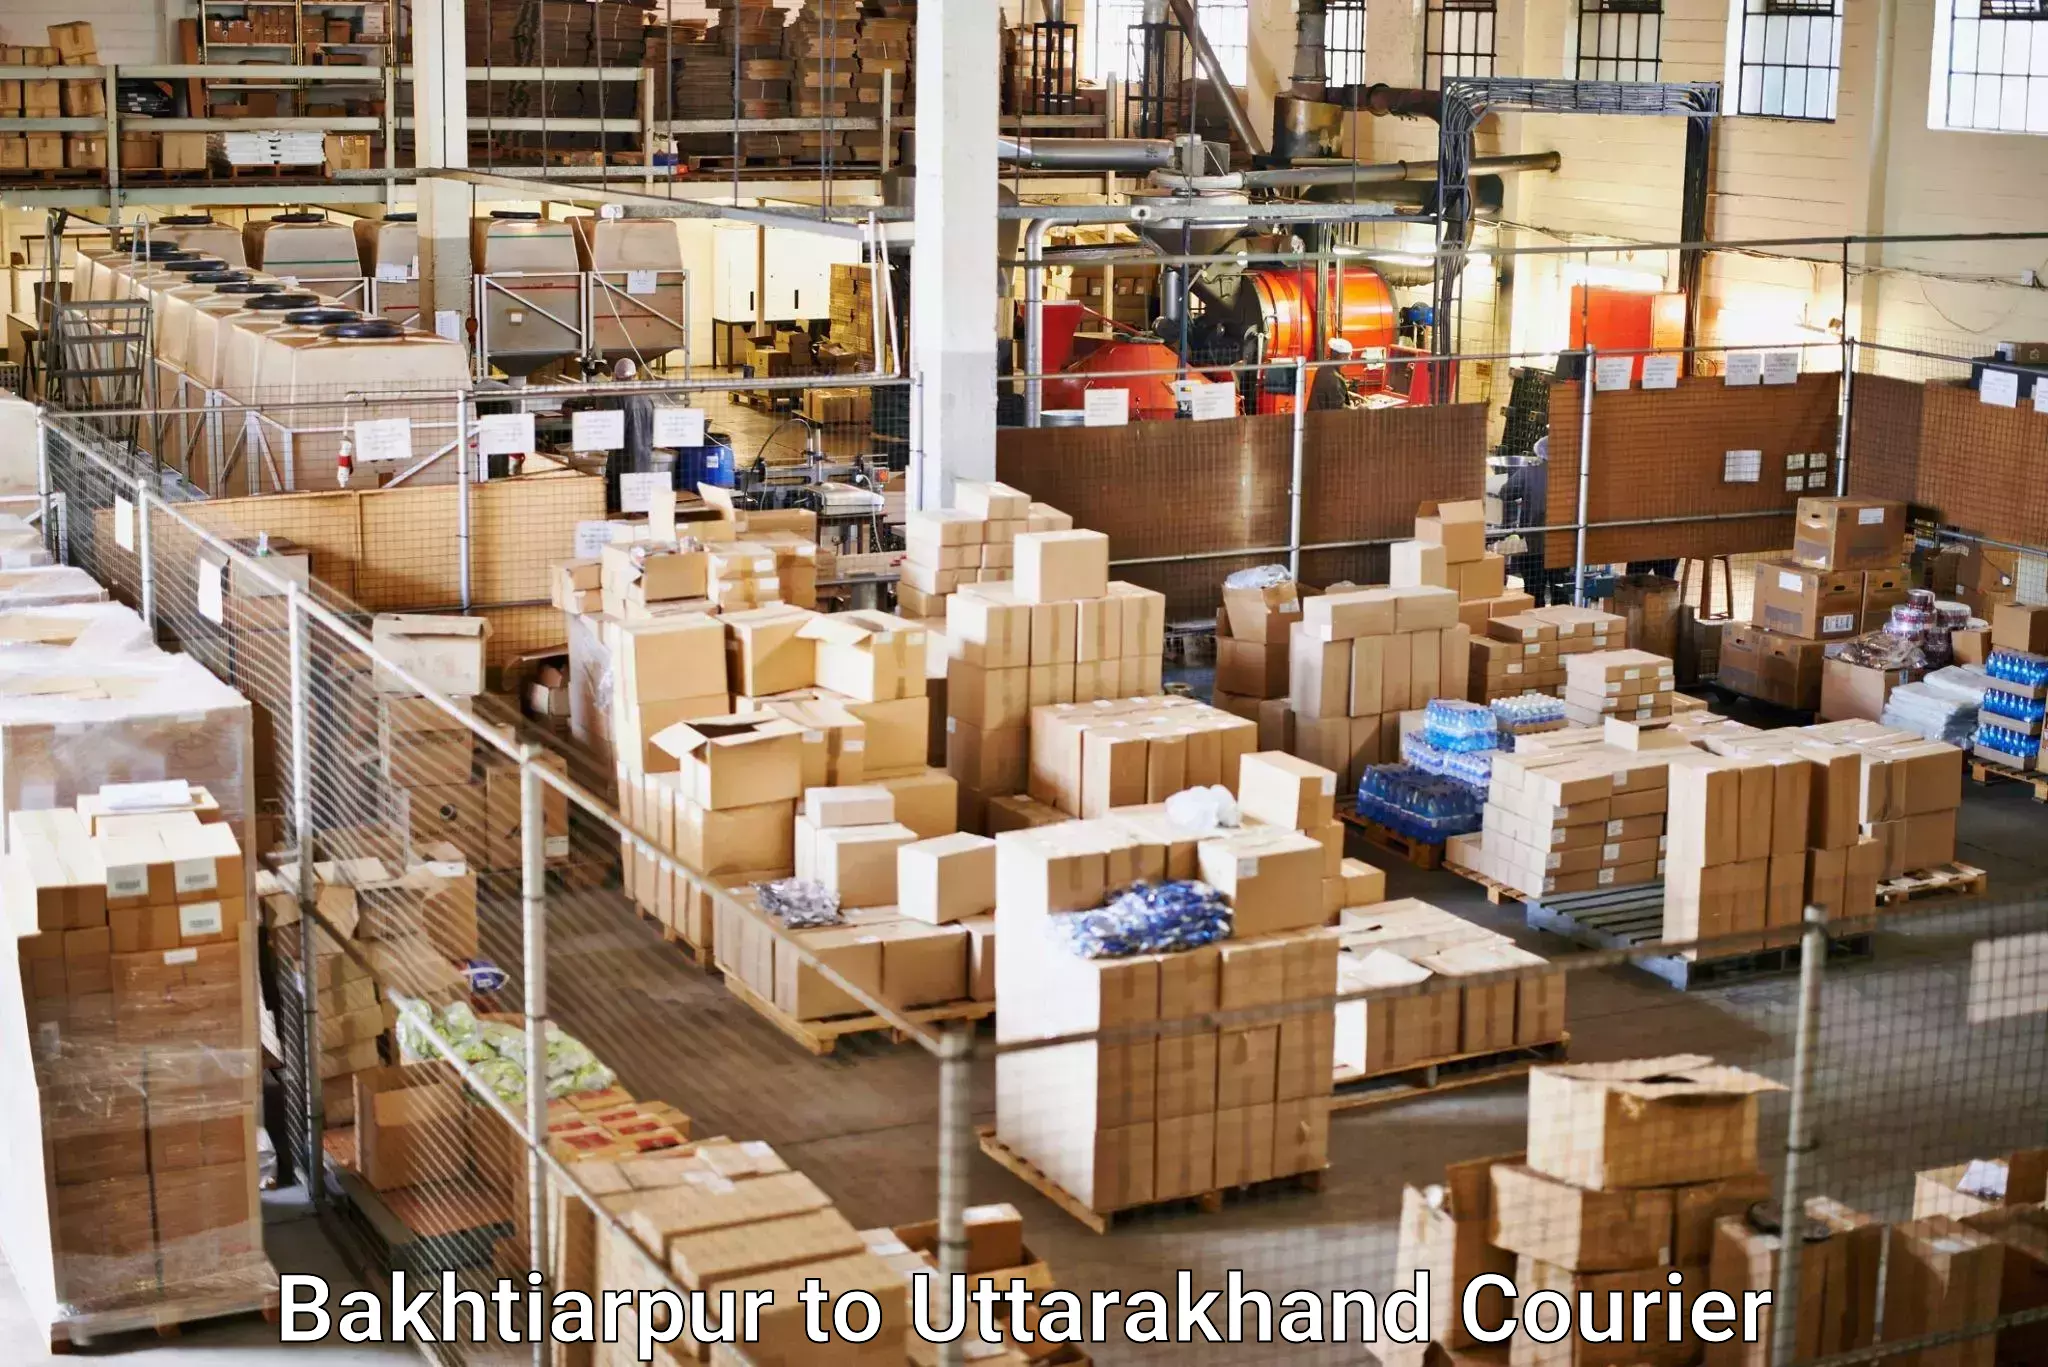 Digital courier platforms Bakhtiarpur to Roorkee